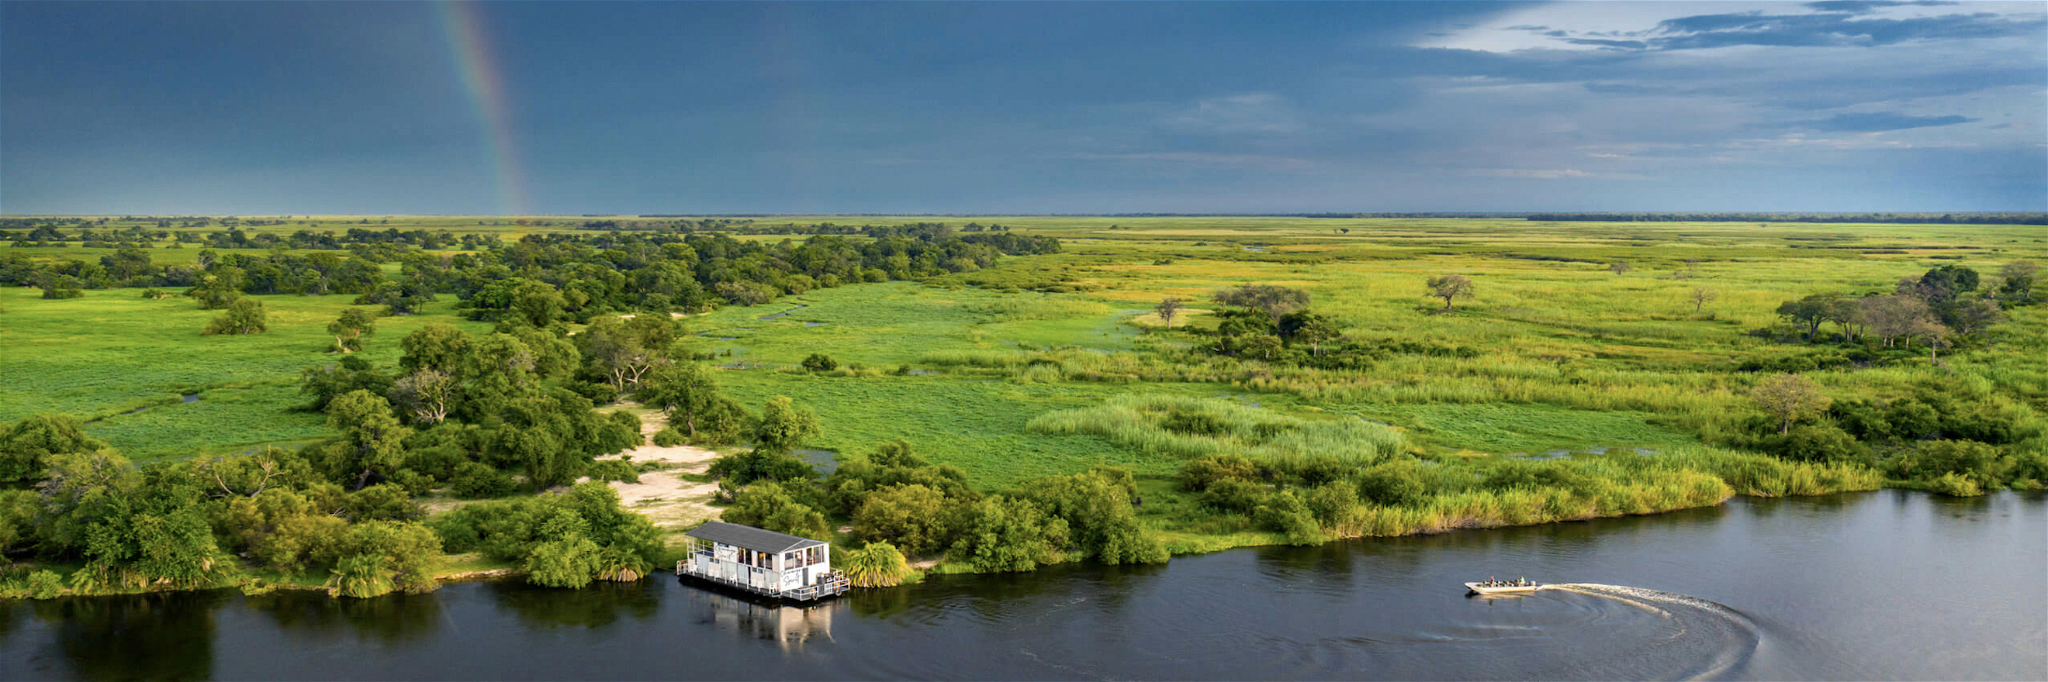 The Okavango&nbsp;Delta was inscribed on the World Heritage List in 2014